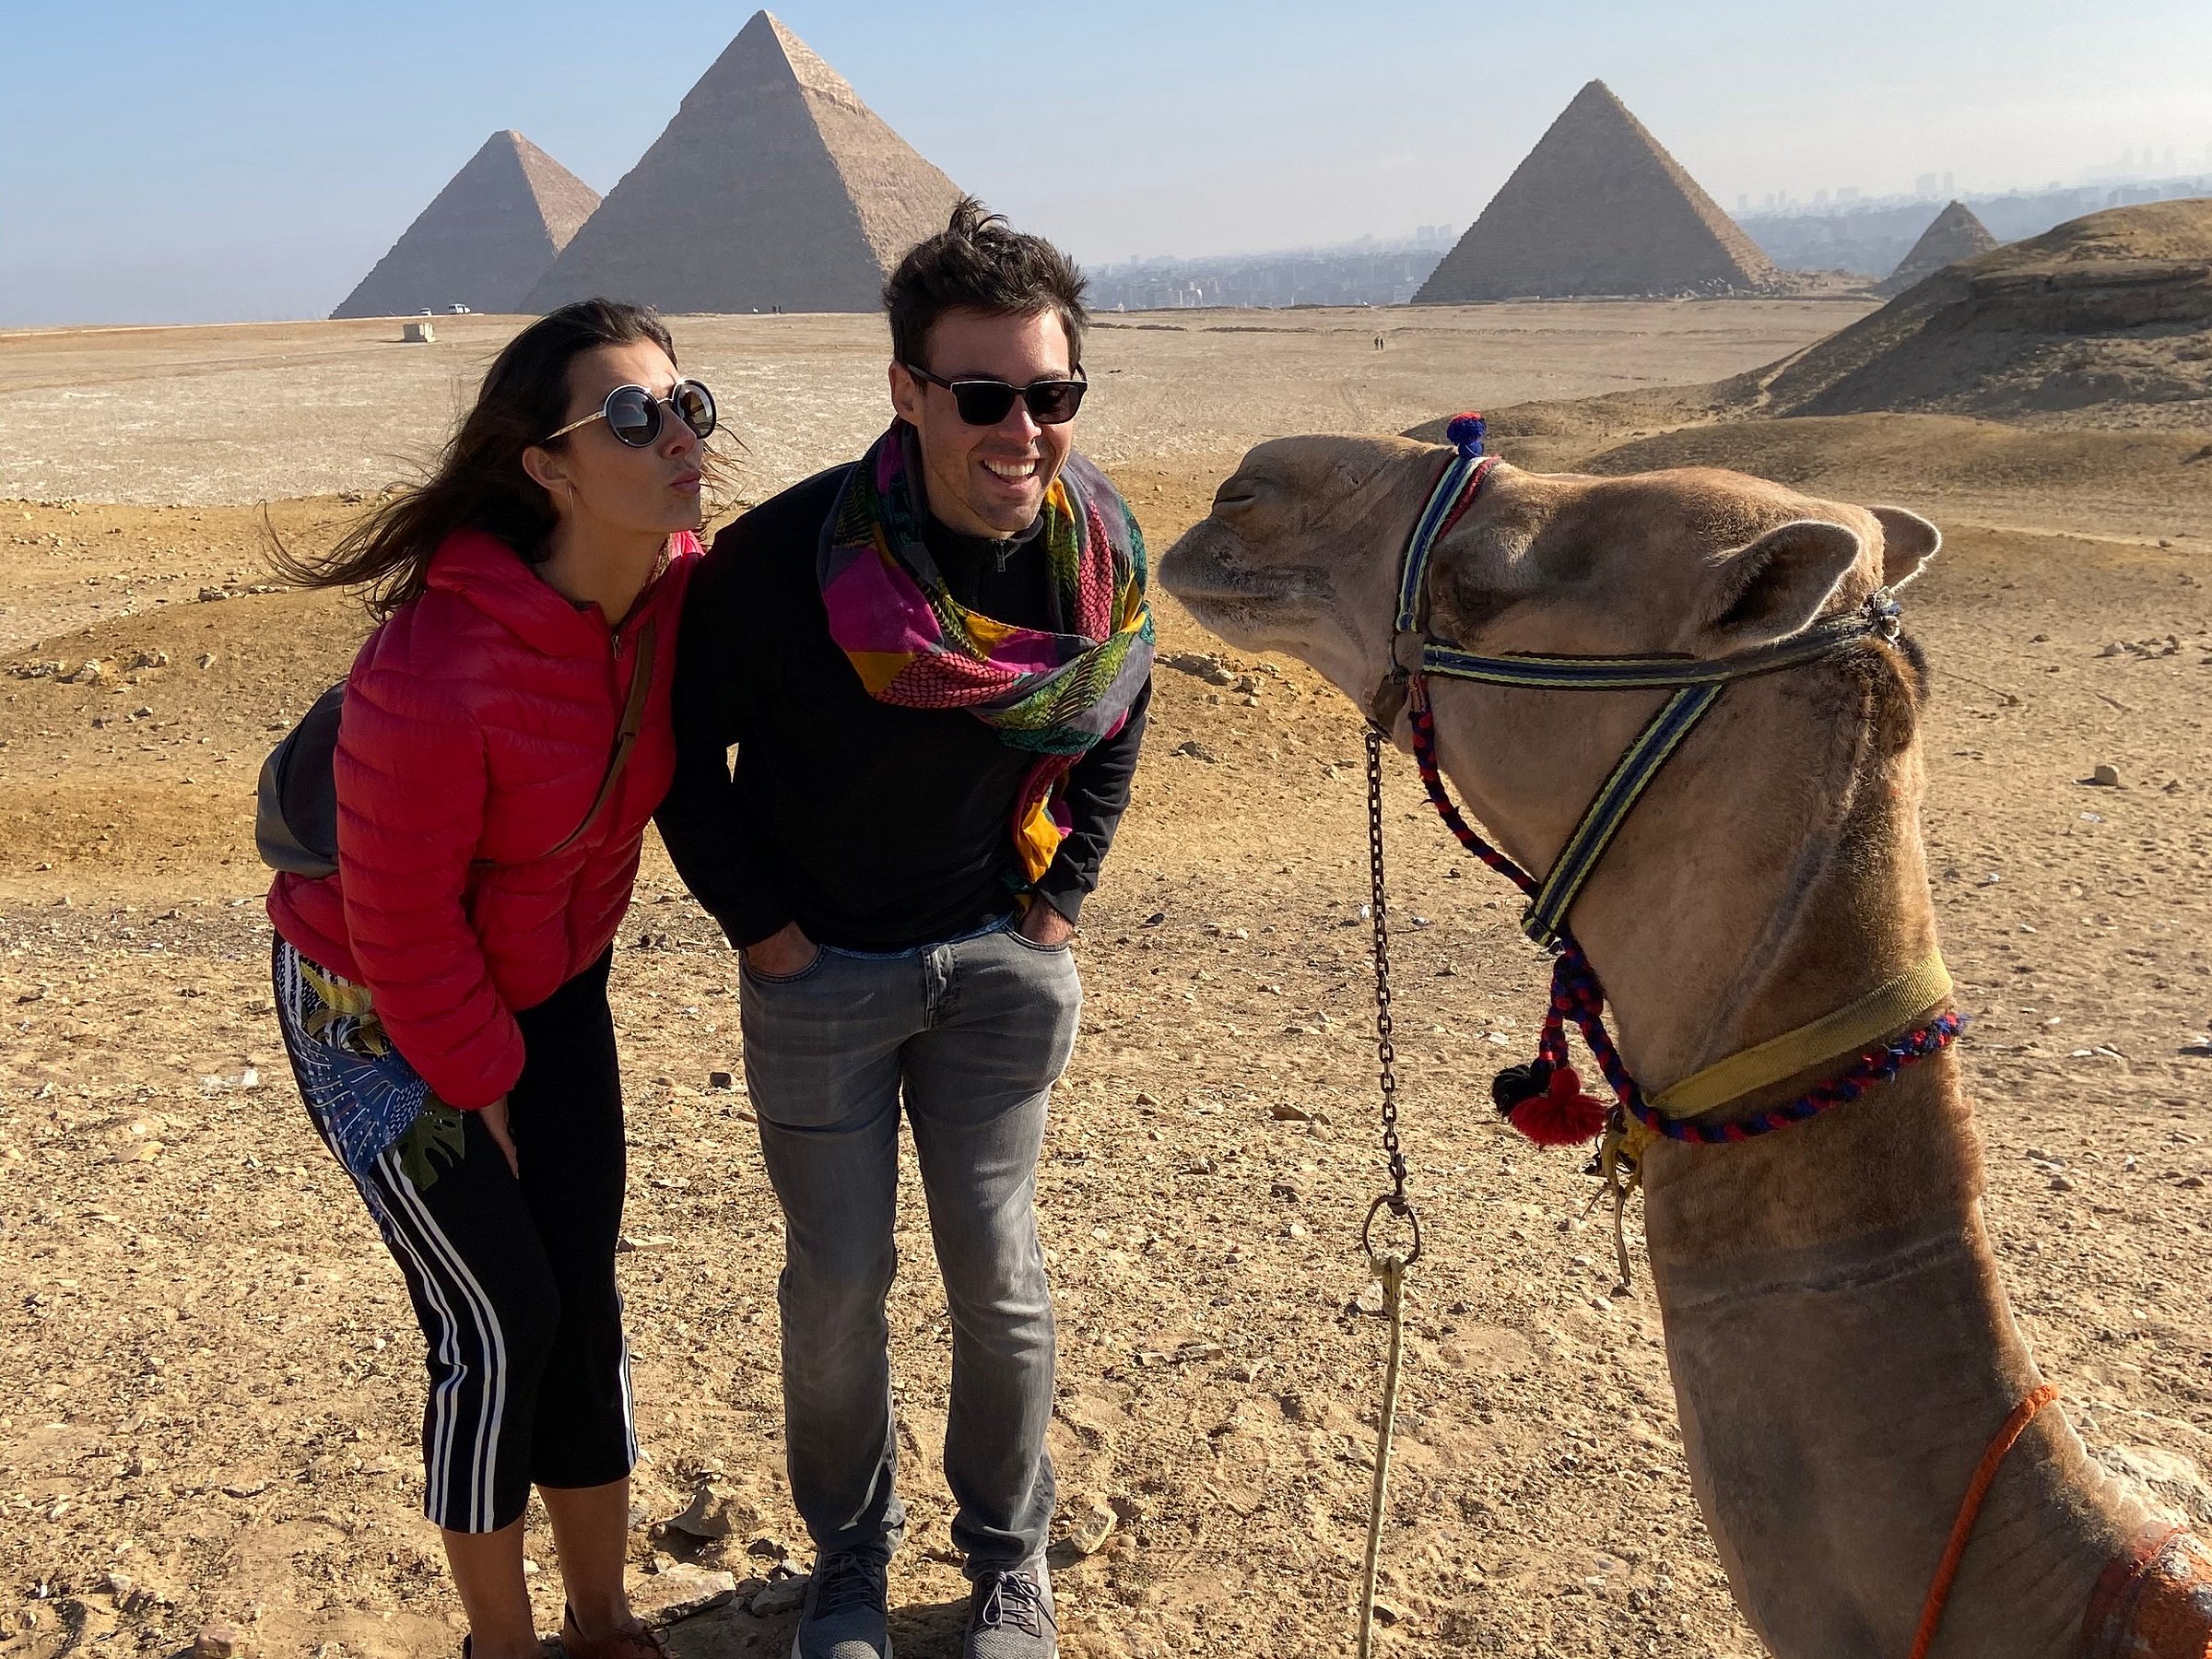 pyramids land tours